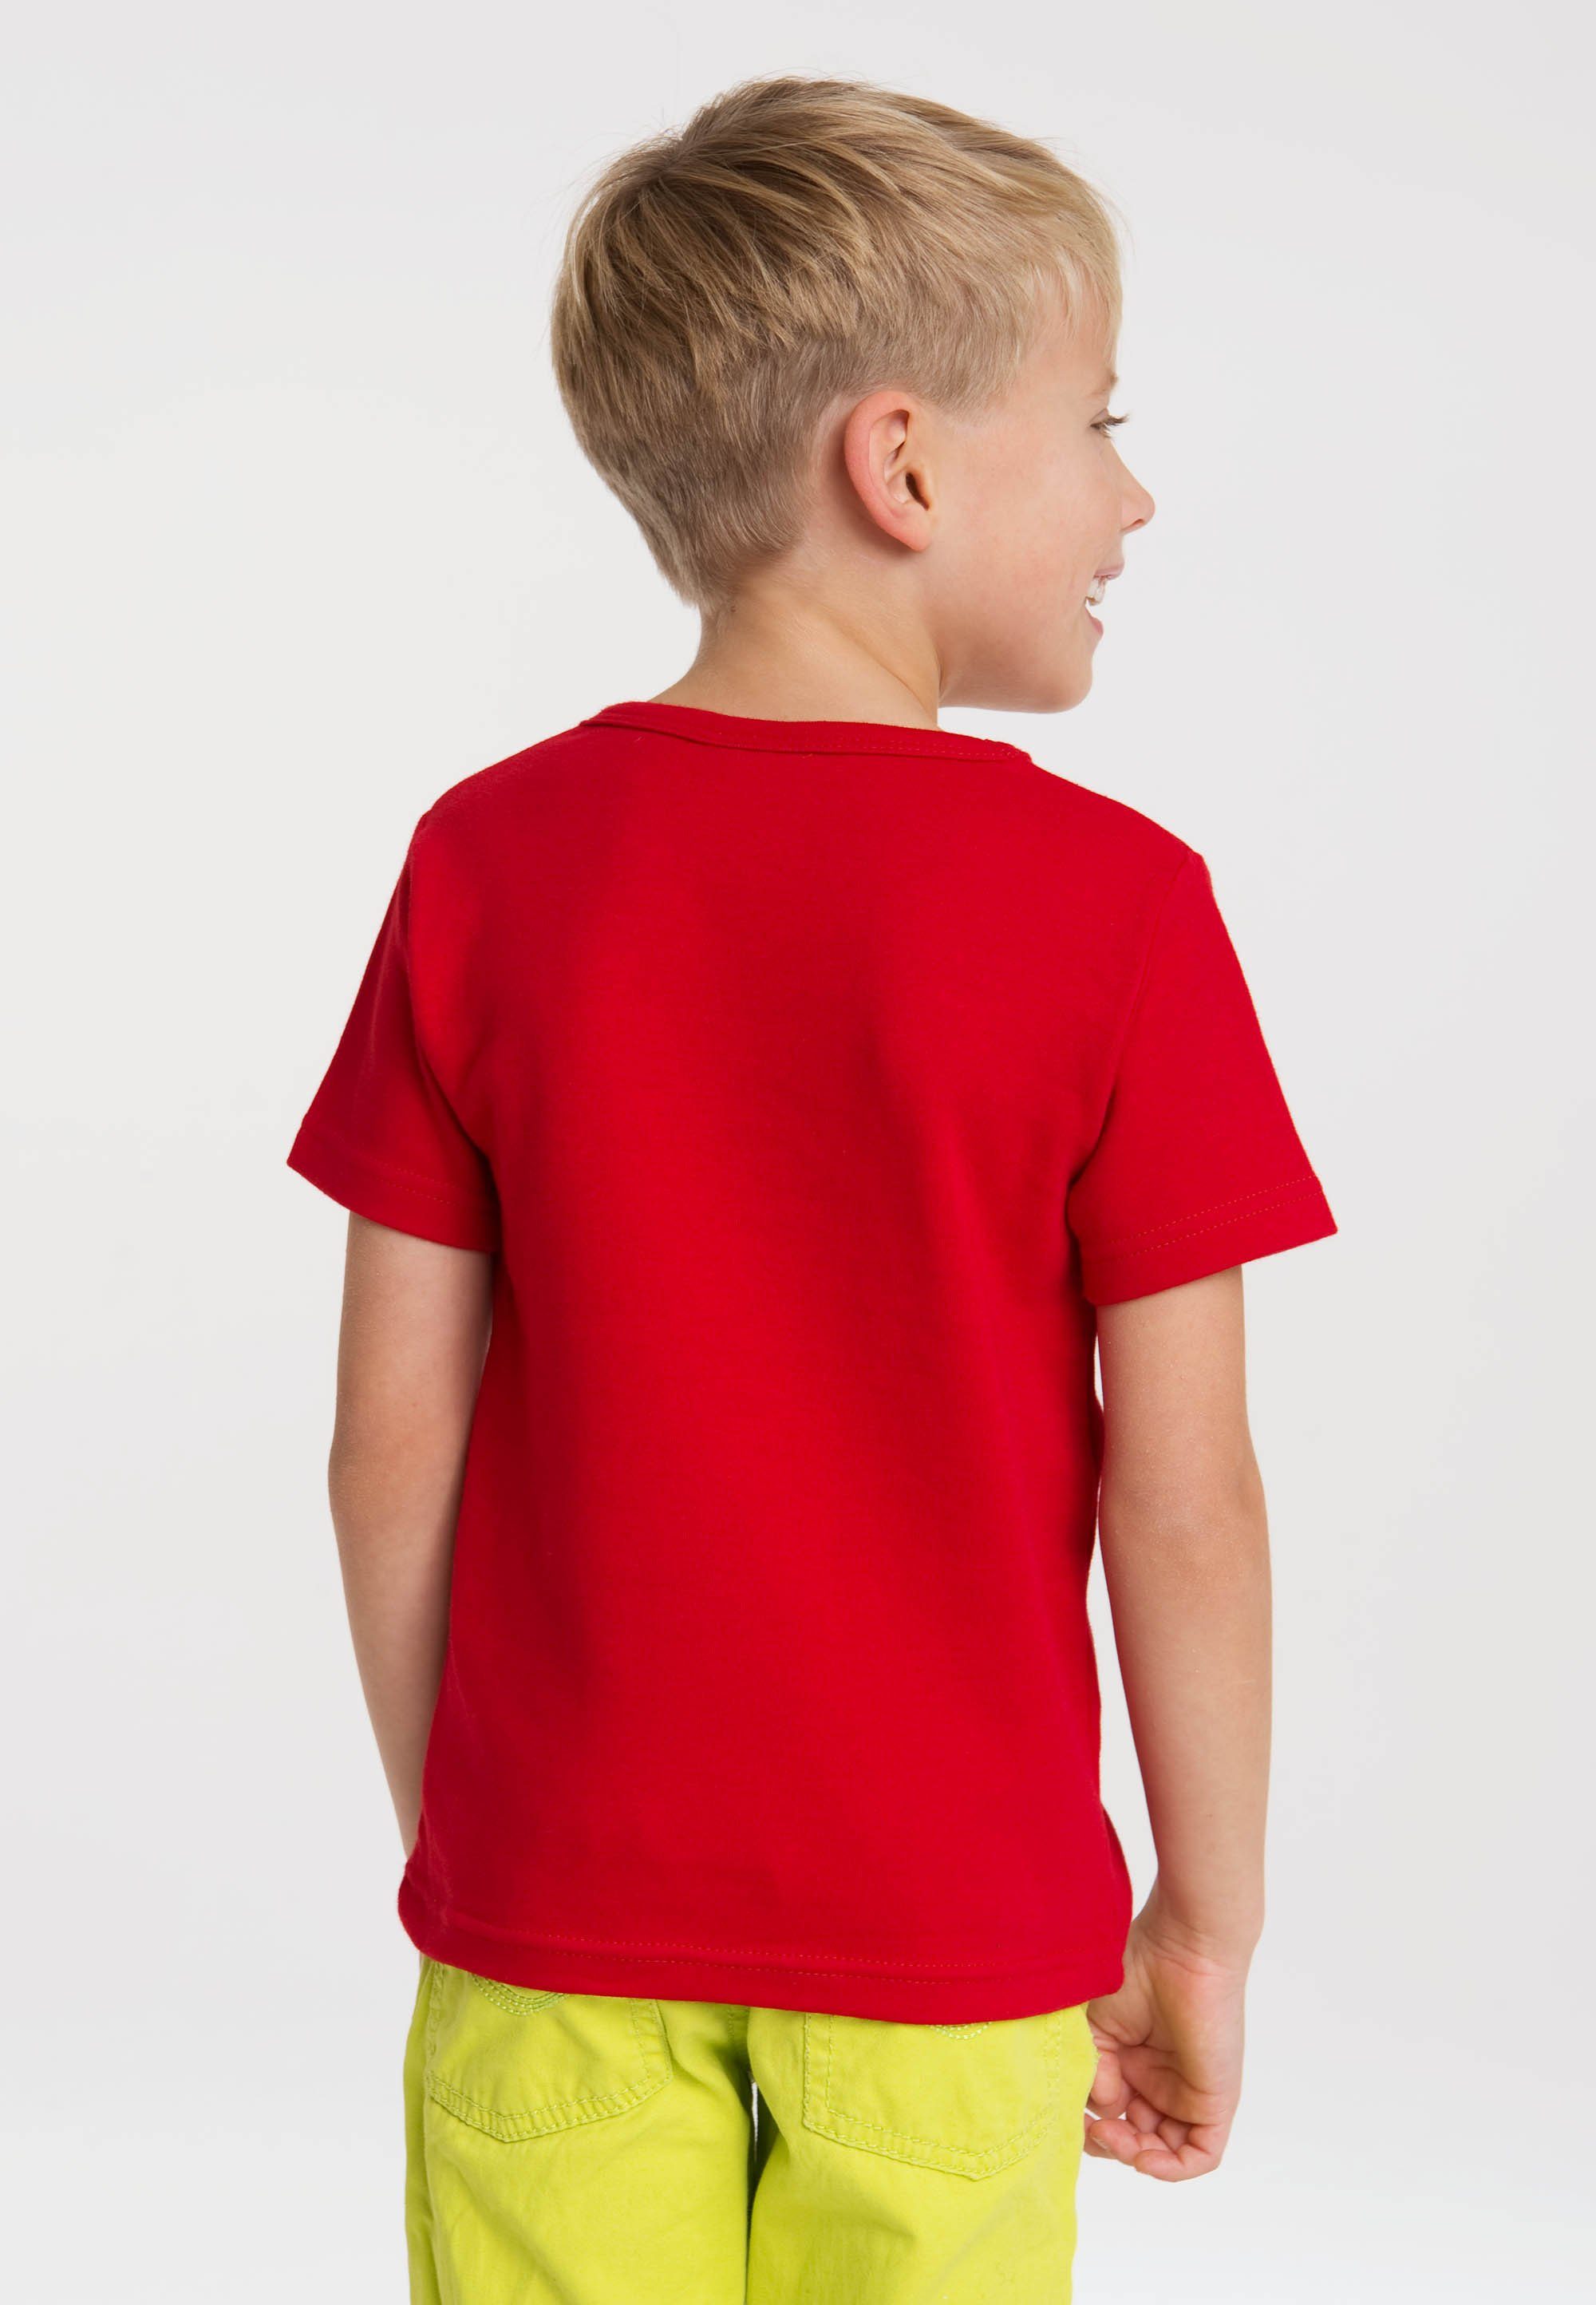 mit Maus LOGOSHIRT lizenziertem T-Shirt Die Originaldesign rot